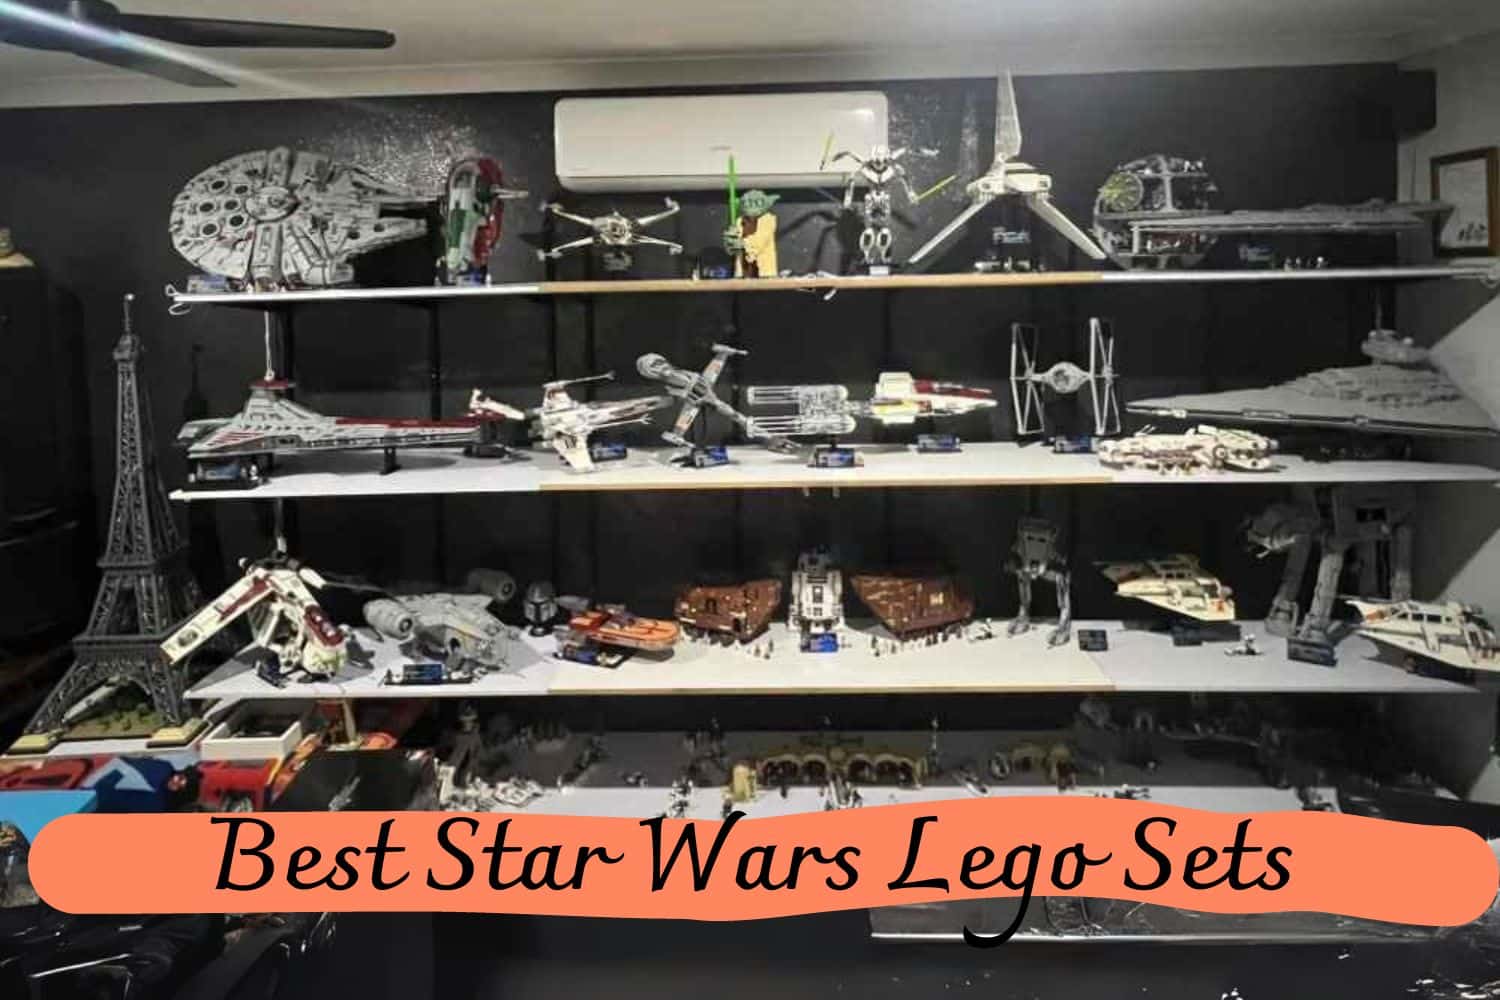 Best Star Wars Lego Sets